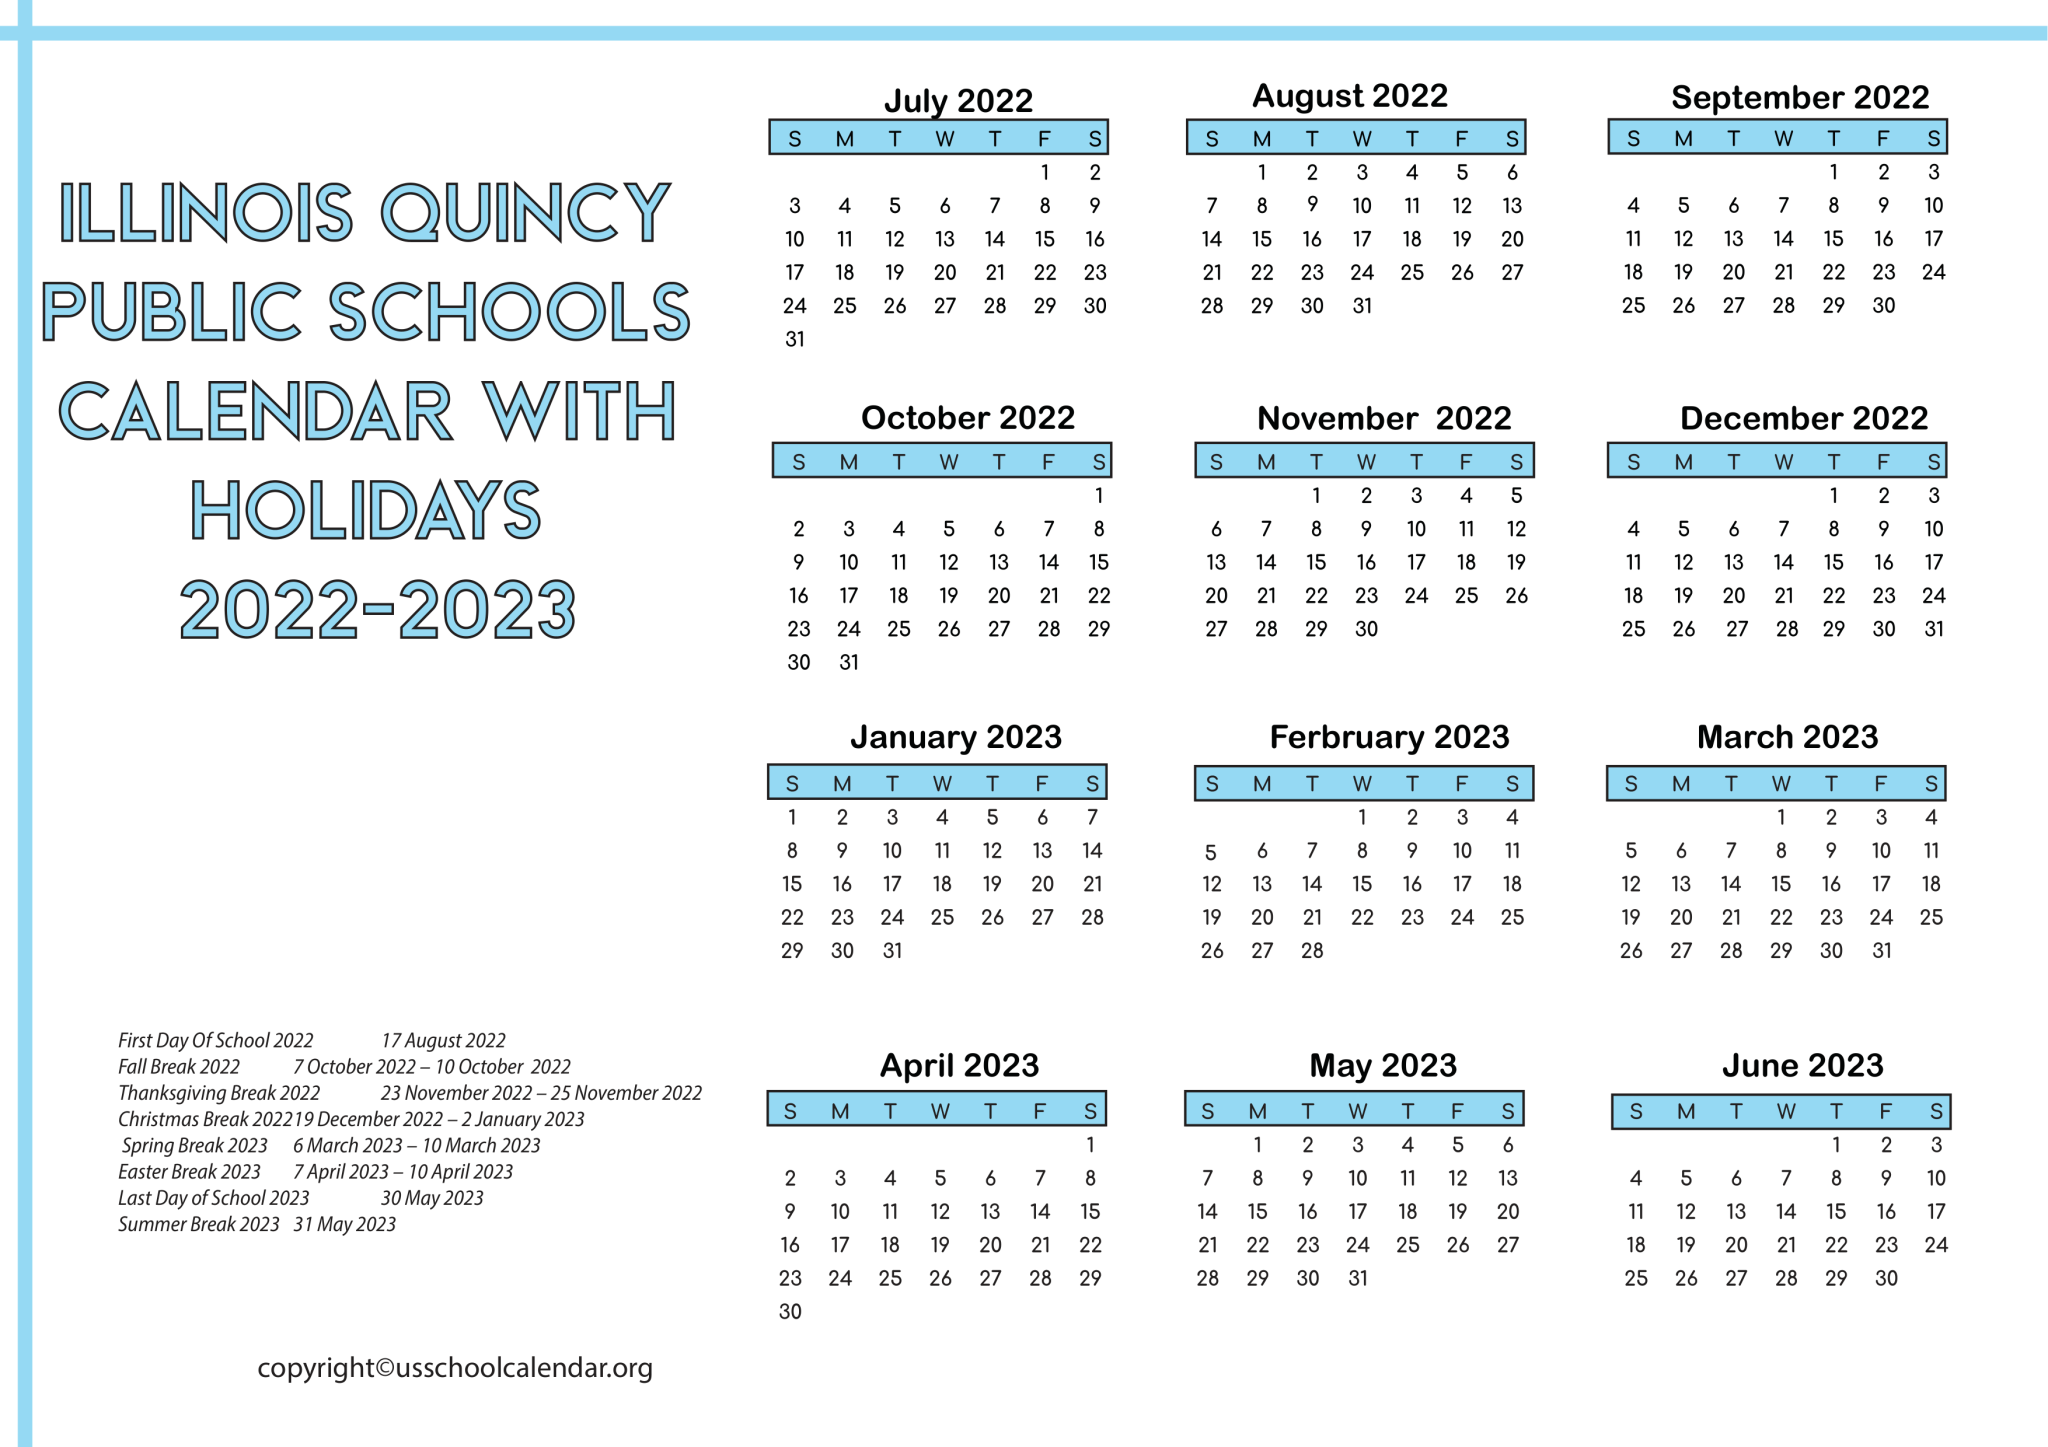 Illinois Quincy Public Schools Calendar with Holidays 20222023